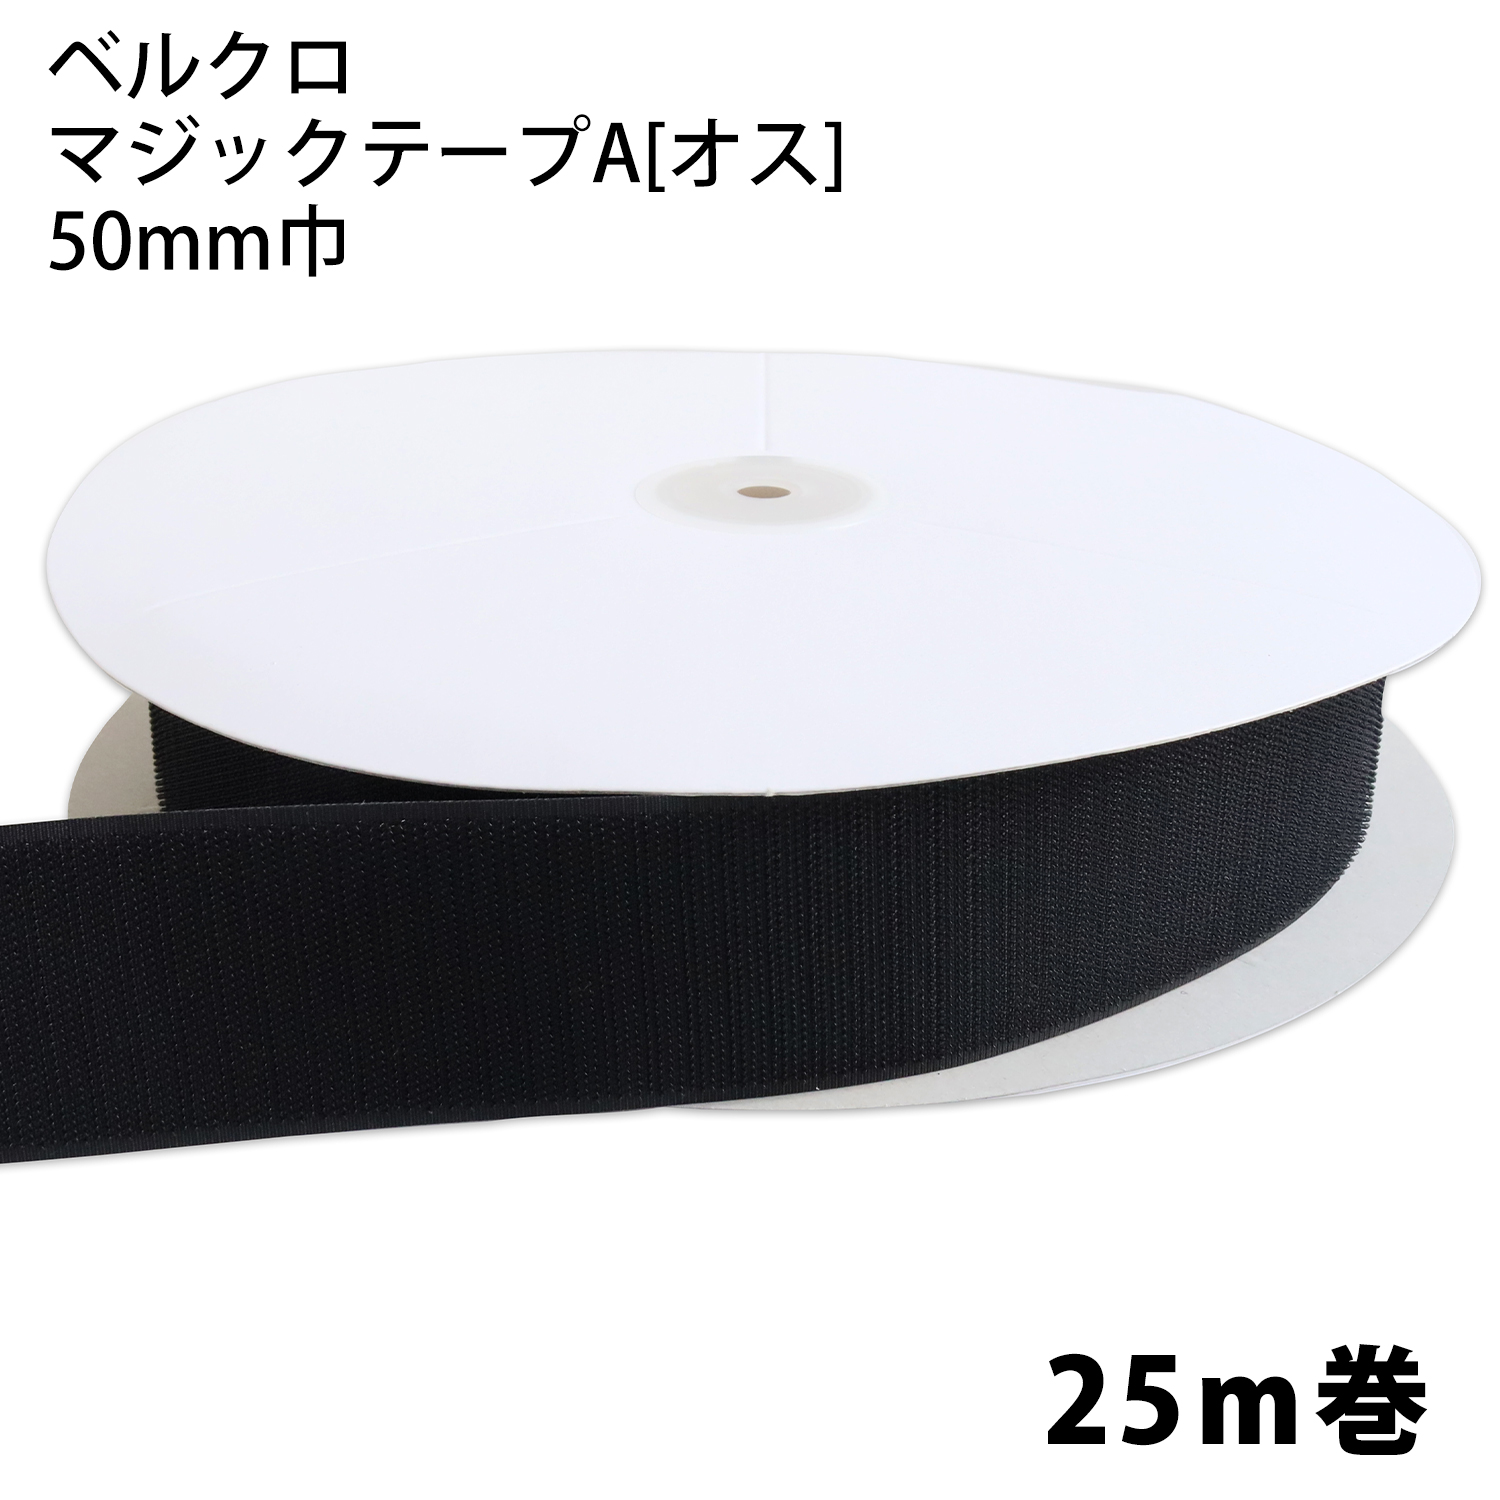 F11-BER50-25A-2 Velcro Tape A [hooks] 50mm Width x 25m black (roll)